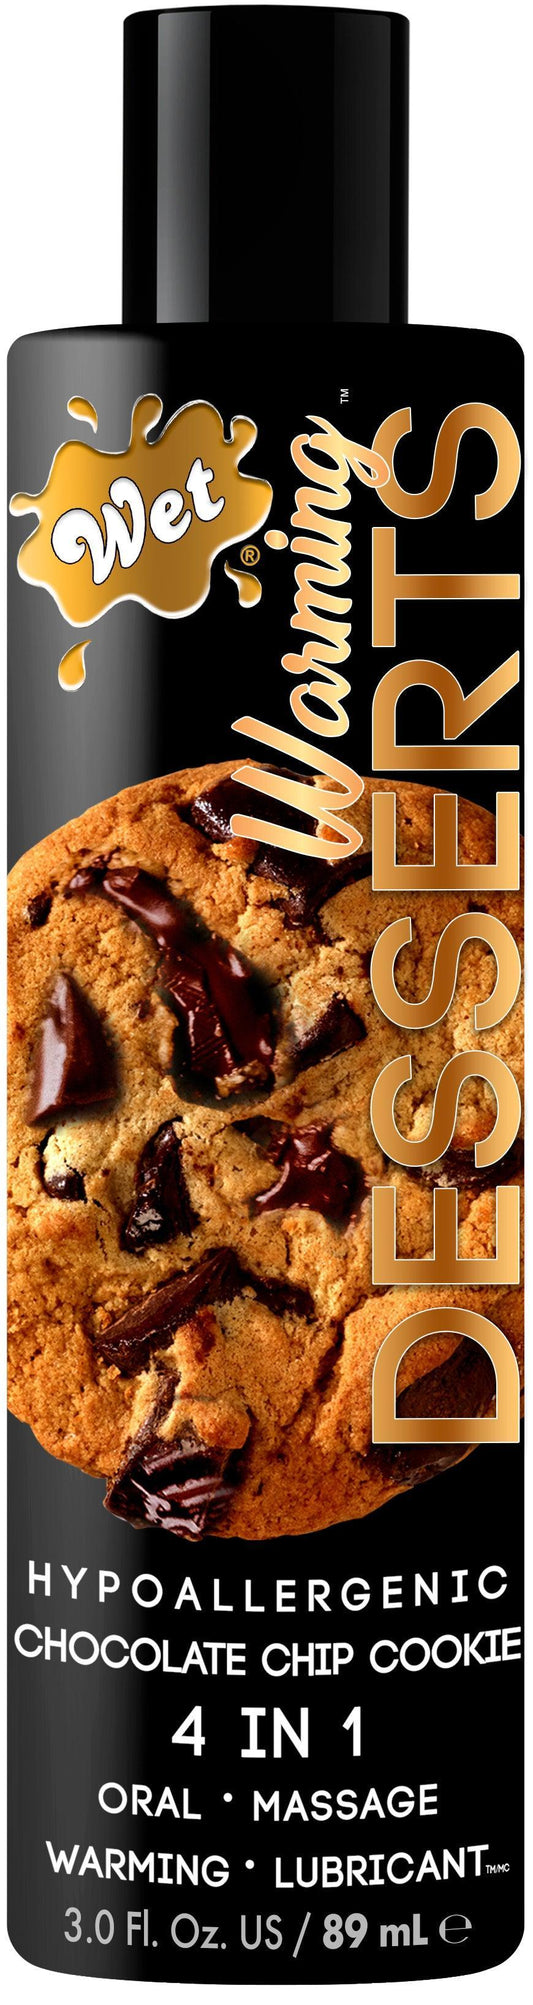 Wet Warming Desserts Baked Chocolate Chip Cookie - 3 Fl. Oz. - My Sex Toy Hub